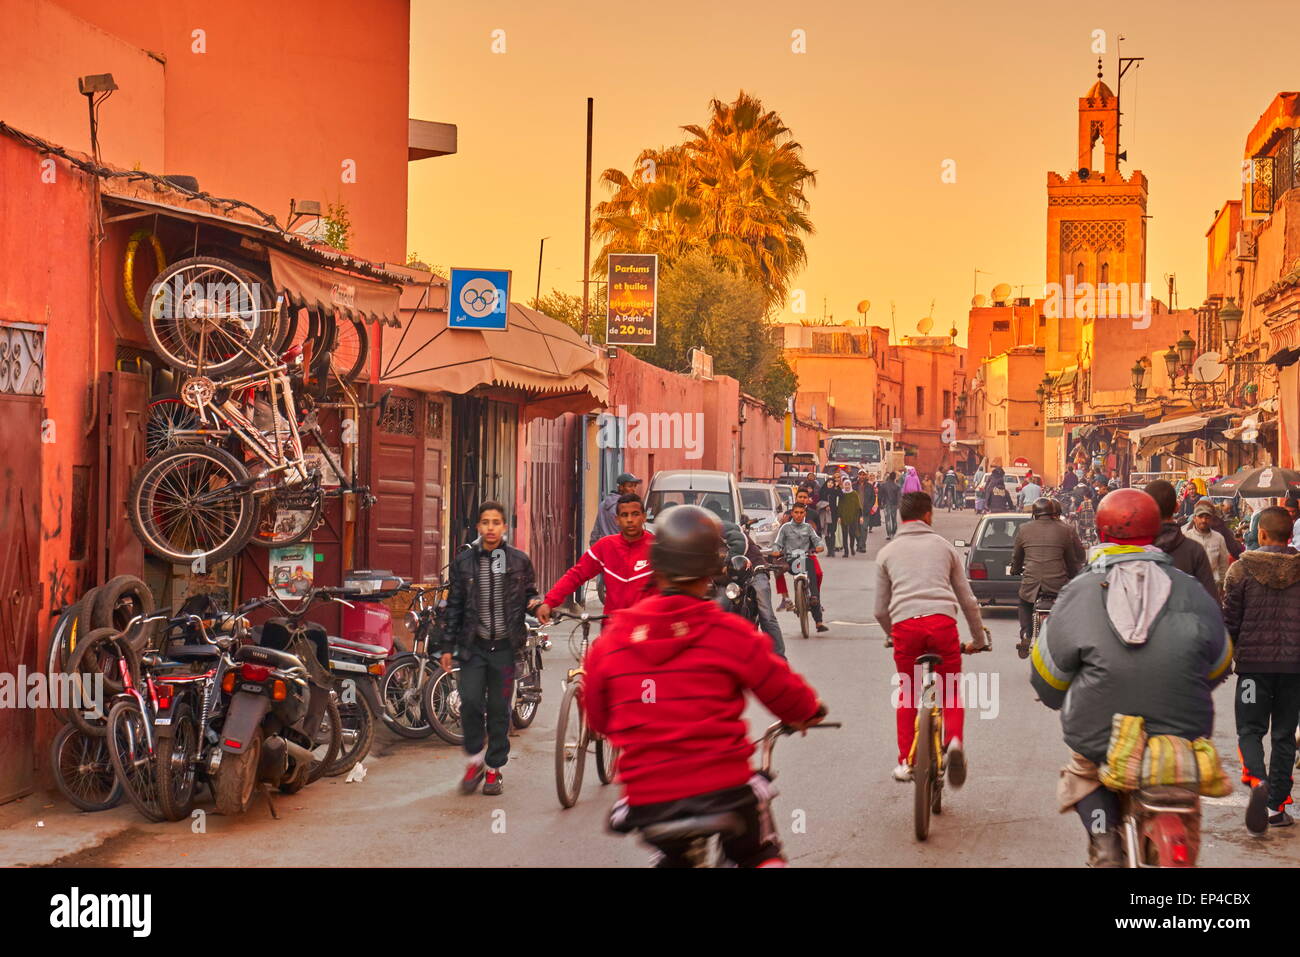 El distrito de Medina de Marrakech, Marruecos Foto de stock